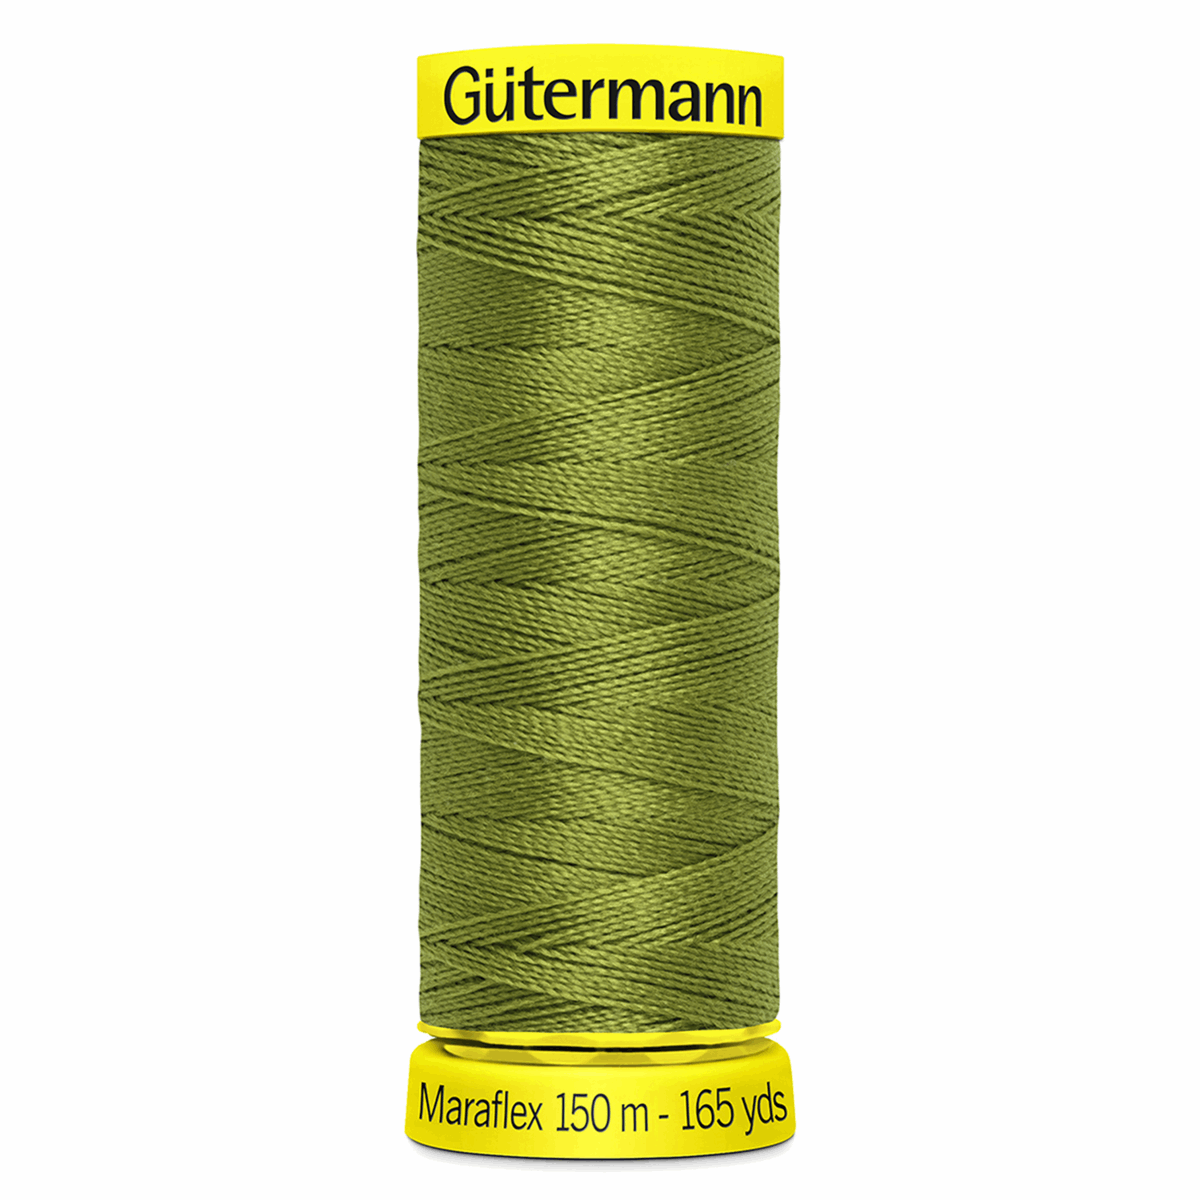 Gutermann Maraflex Elastic Sewing Thread 150m Moss Green 582